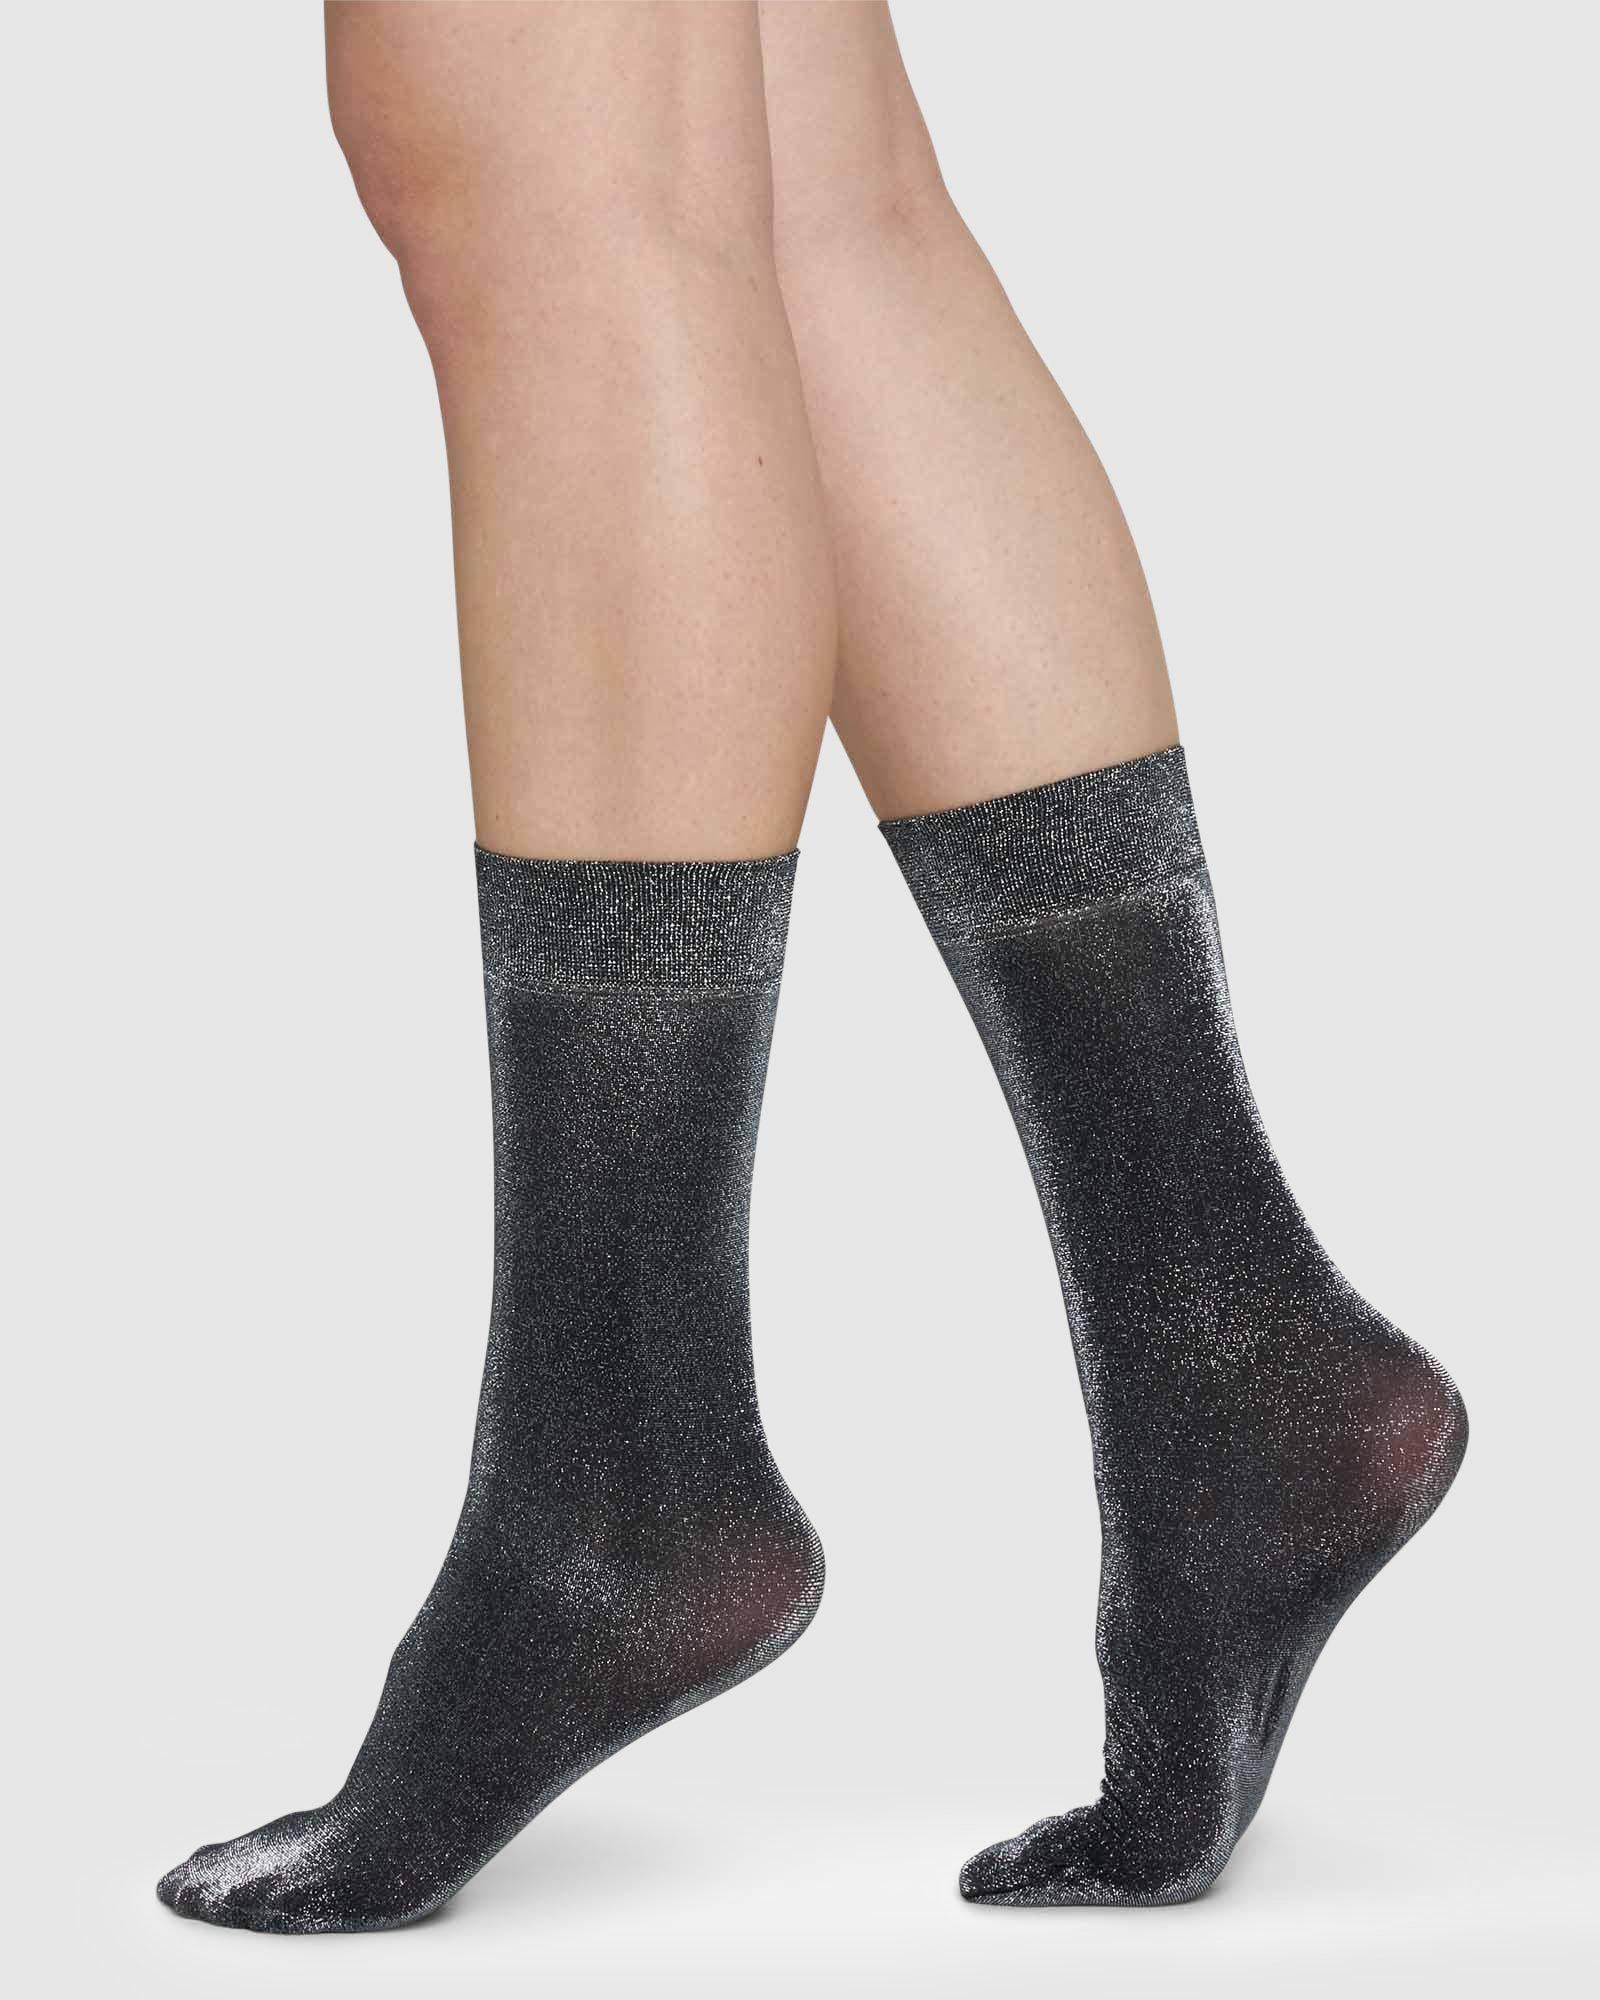 Ines Shimmery Socks Black 2